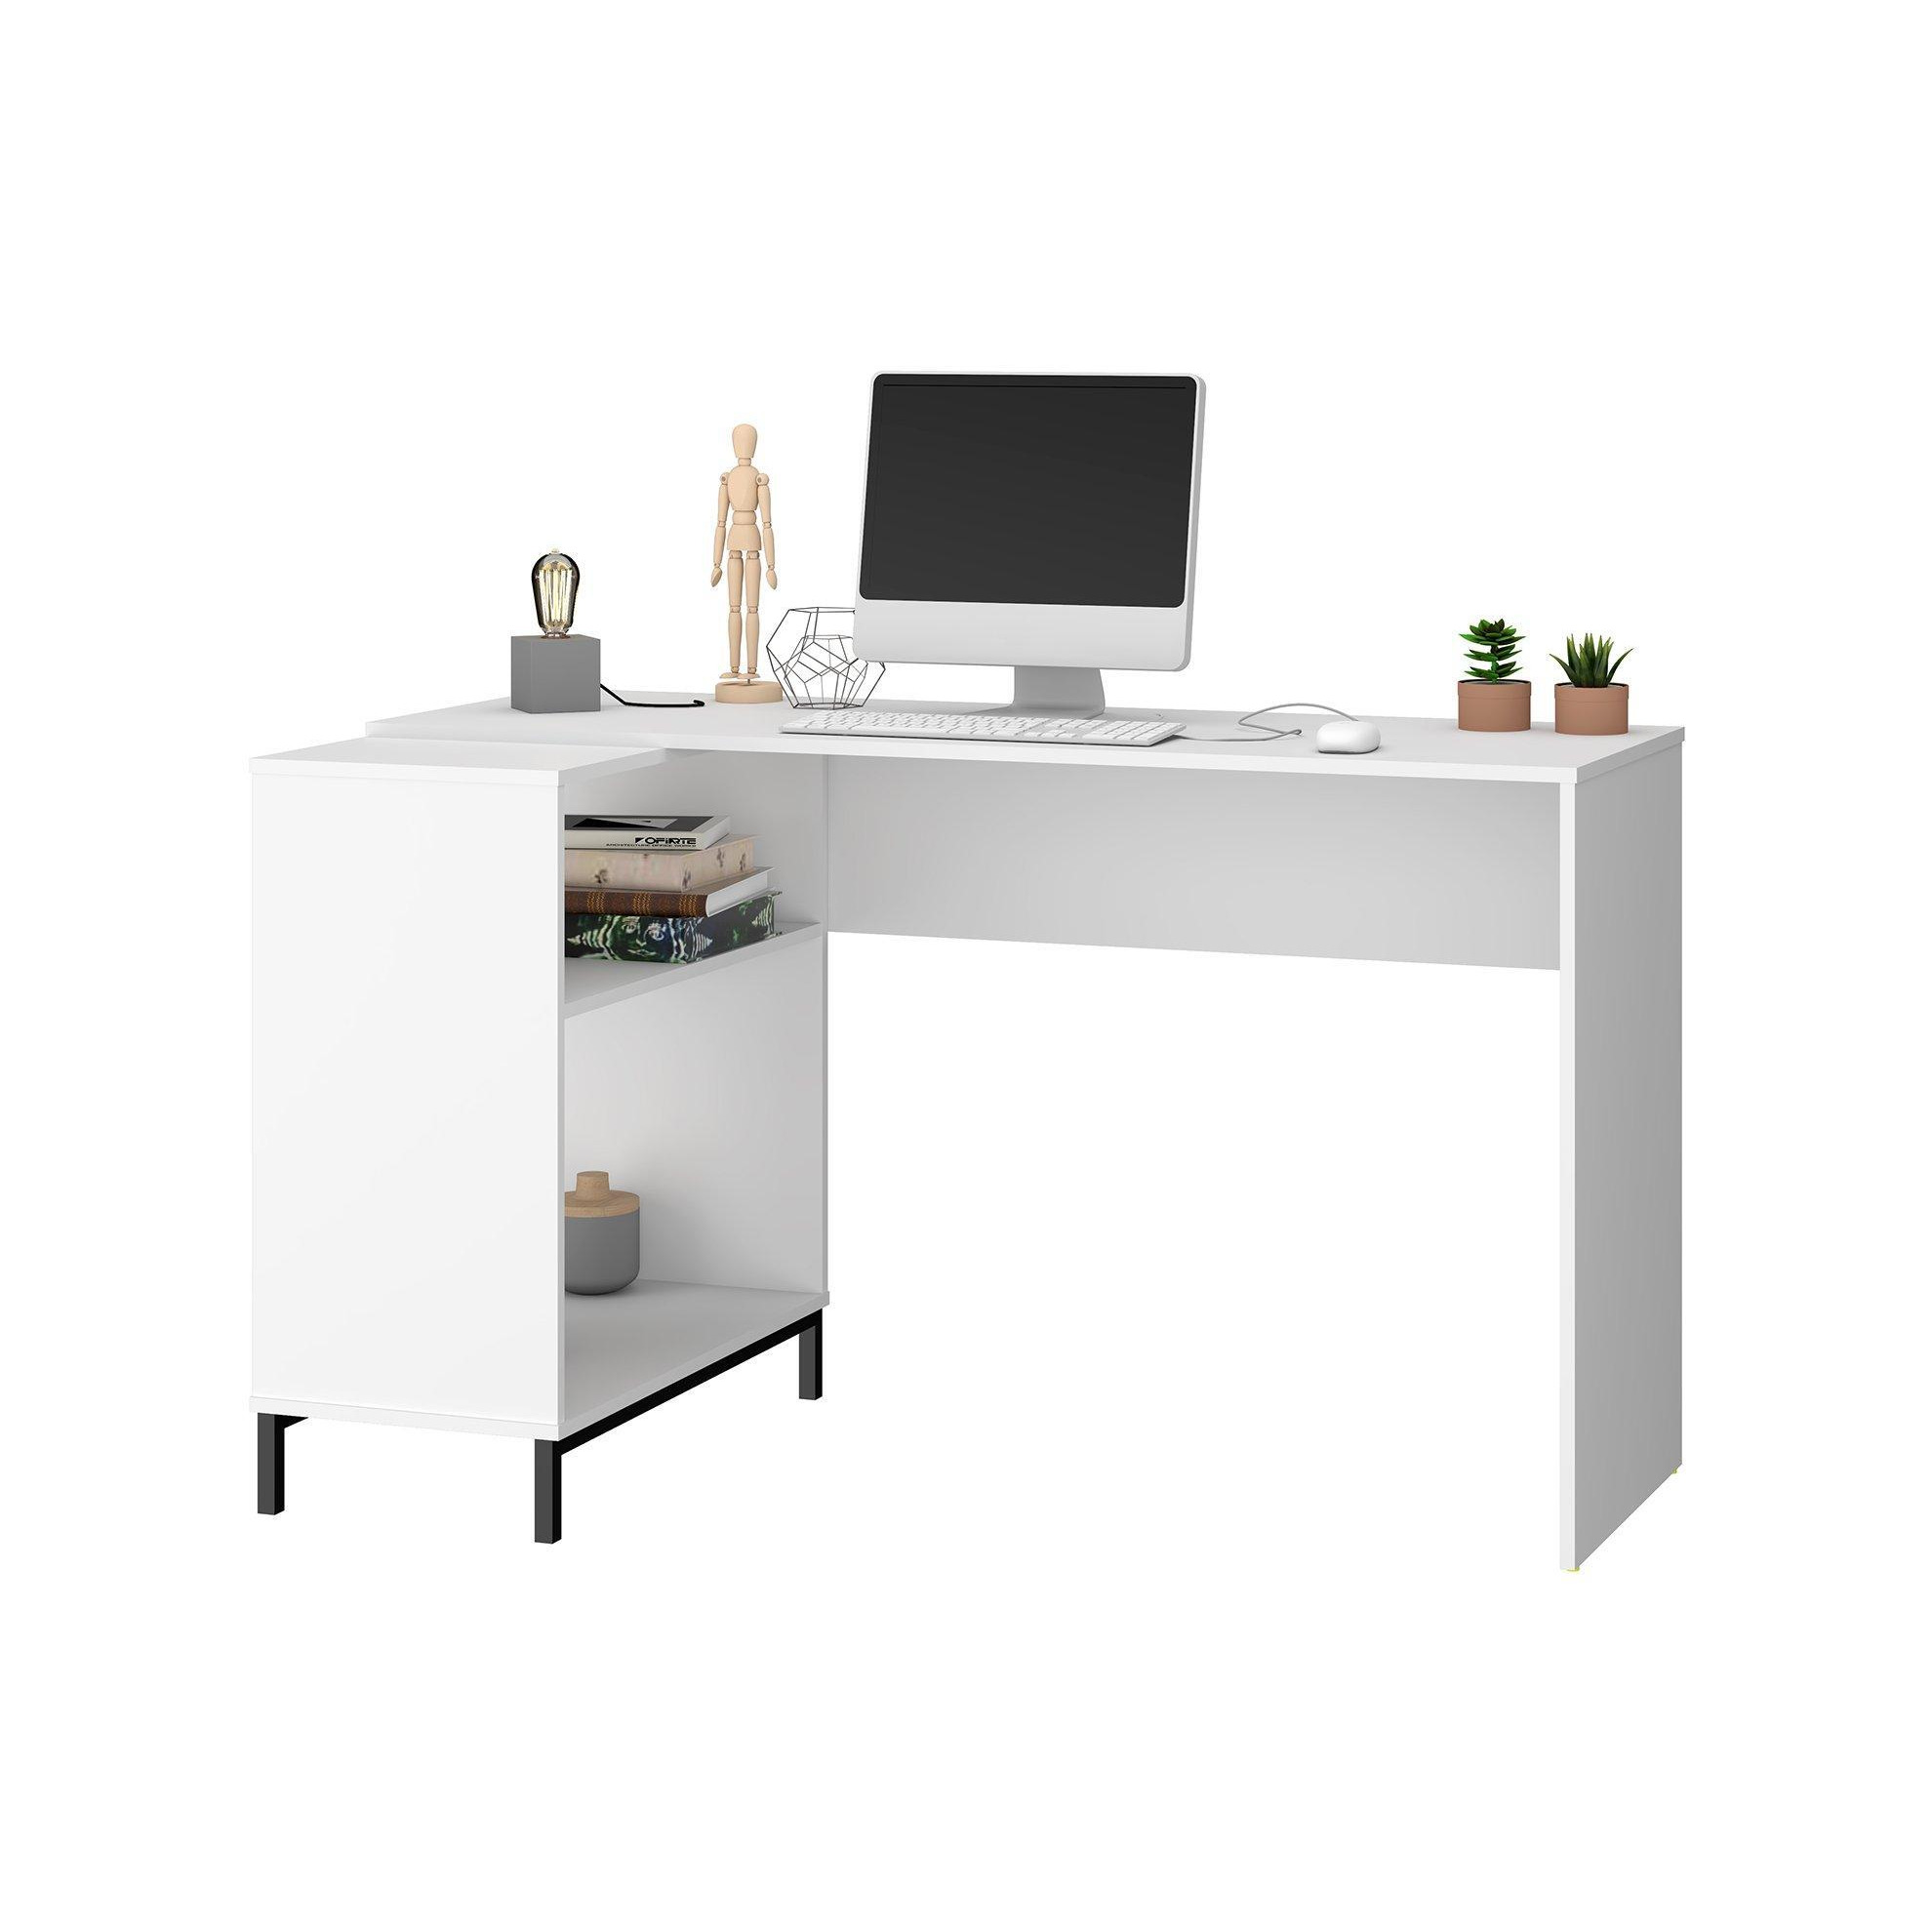 Vola Corner Computer Desk - image 1